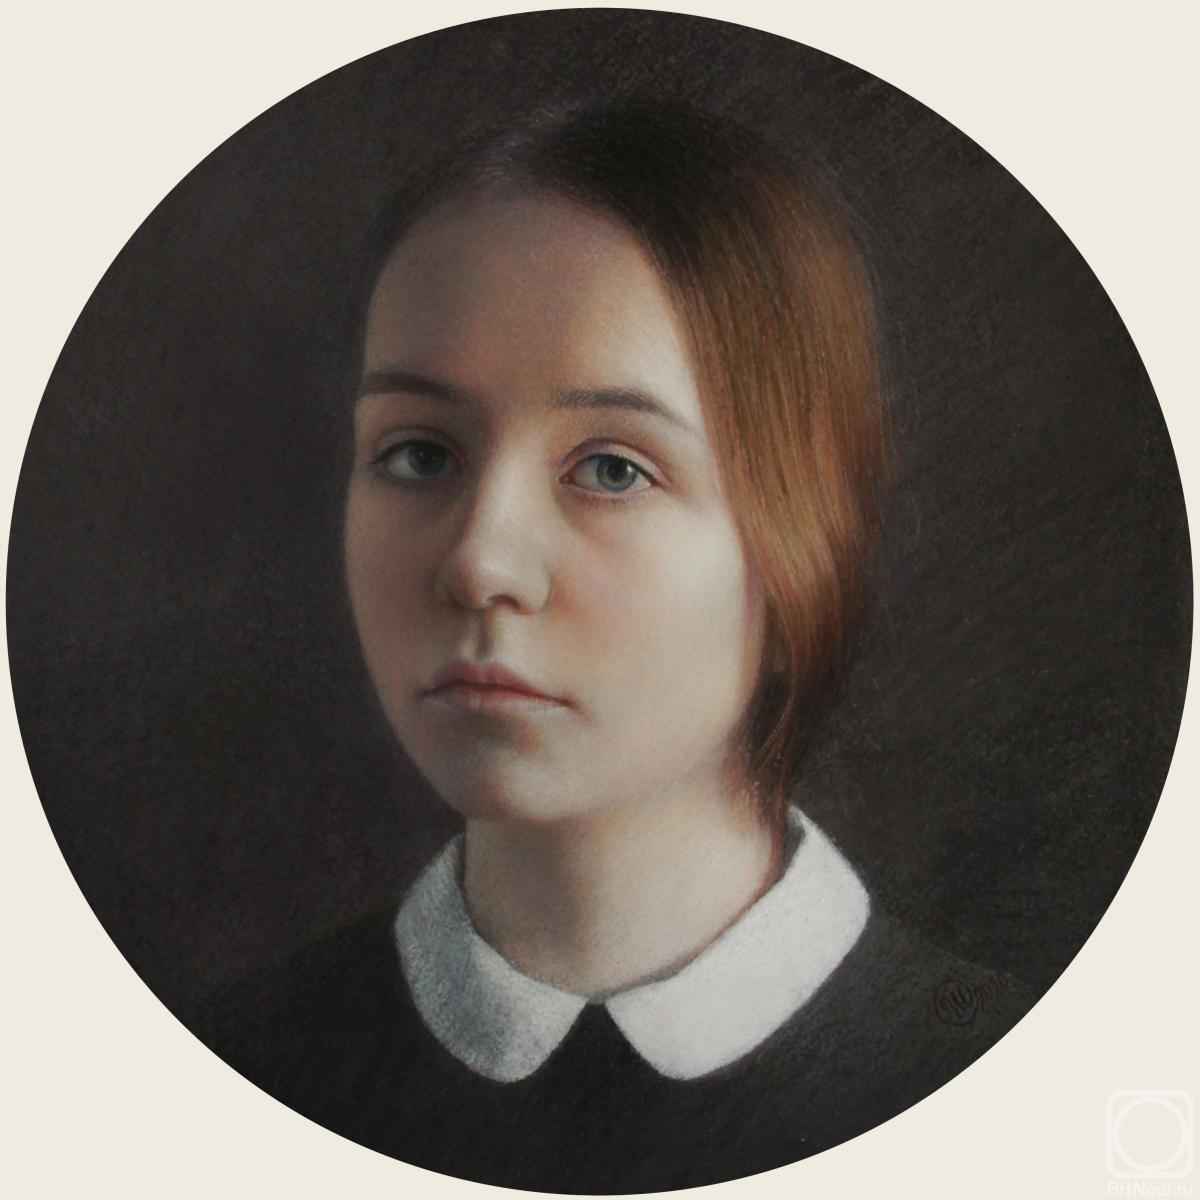 Shirokova Svetlana. Portrait in a circle